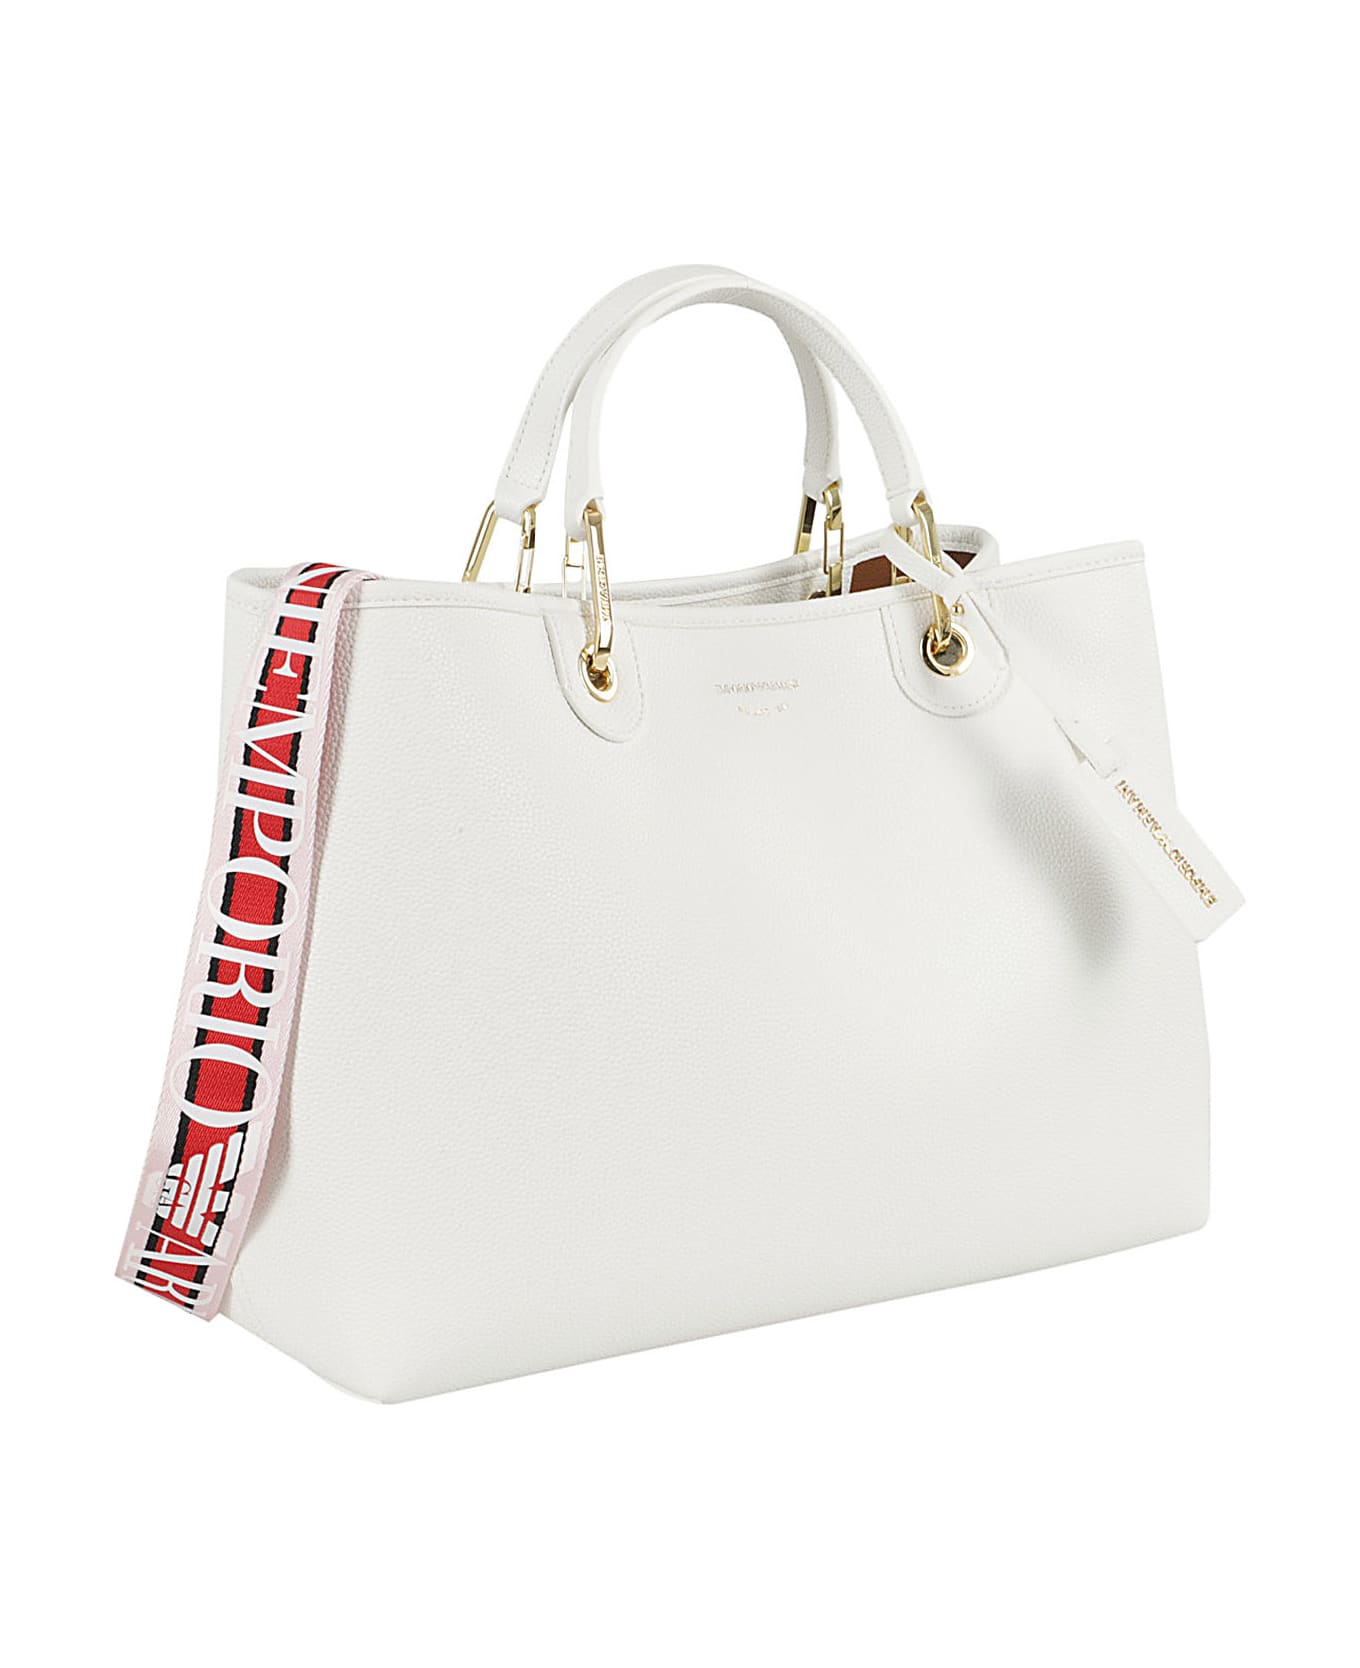 Emporio Armani Shopping Bag - Bianco Cuoio トートバッグ